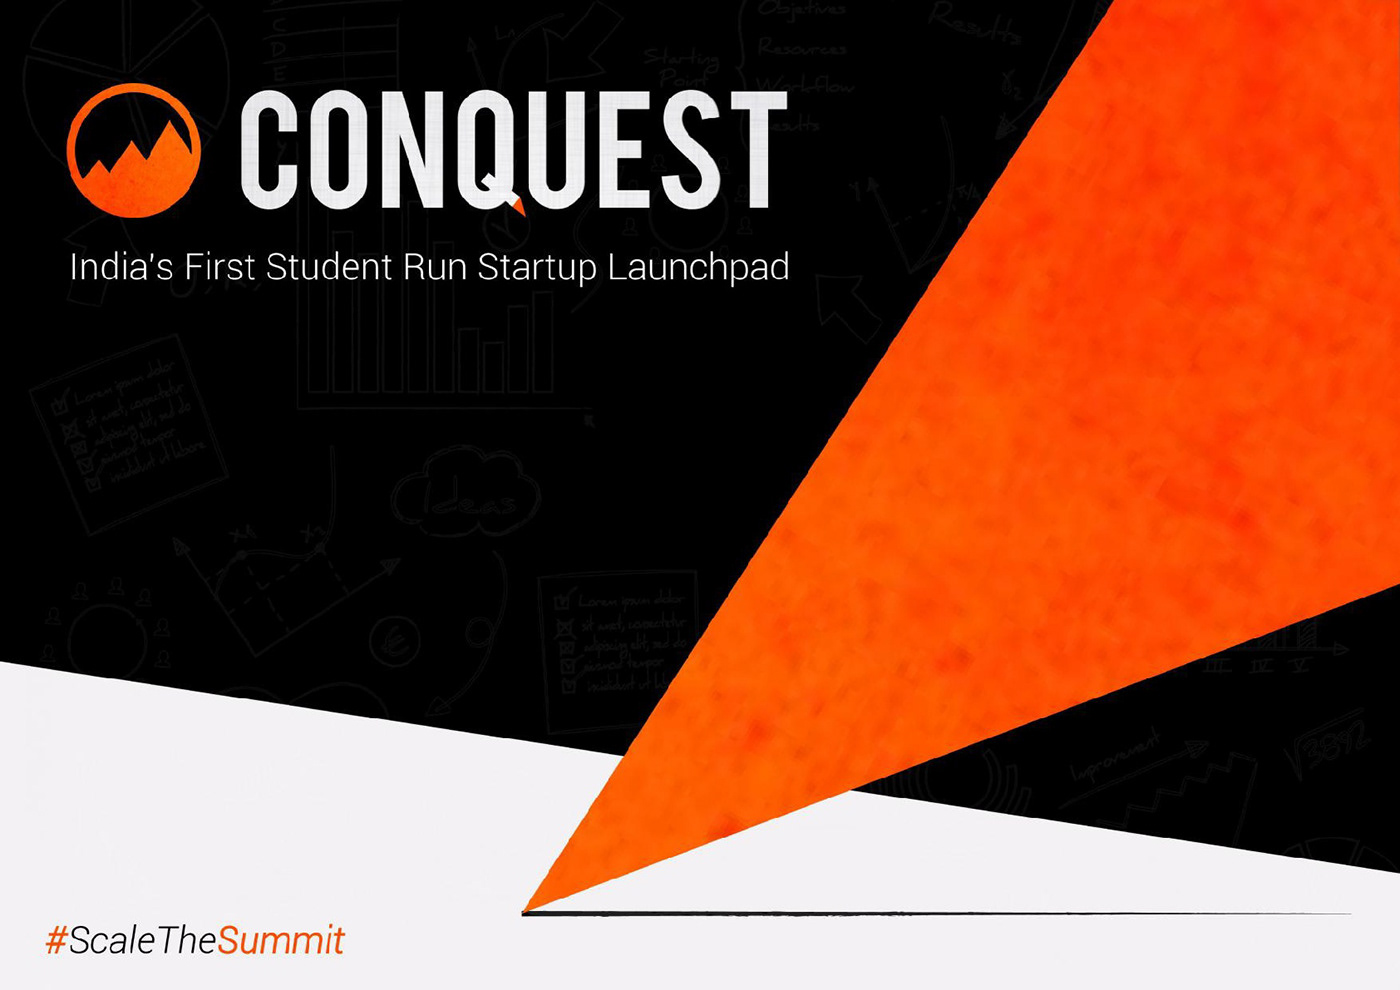 Conquest brochure BITS Pilani startups entrepreneurship   launchpad branding 